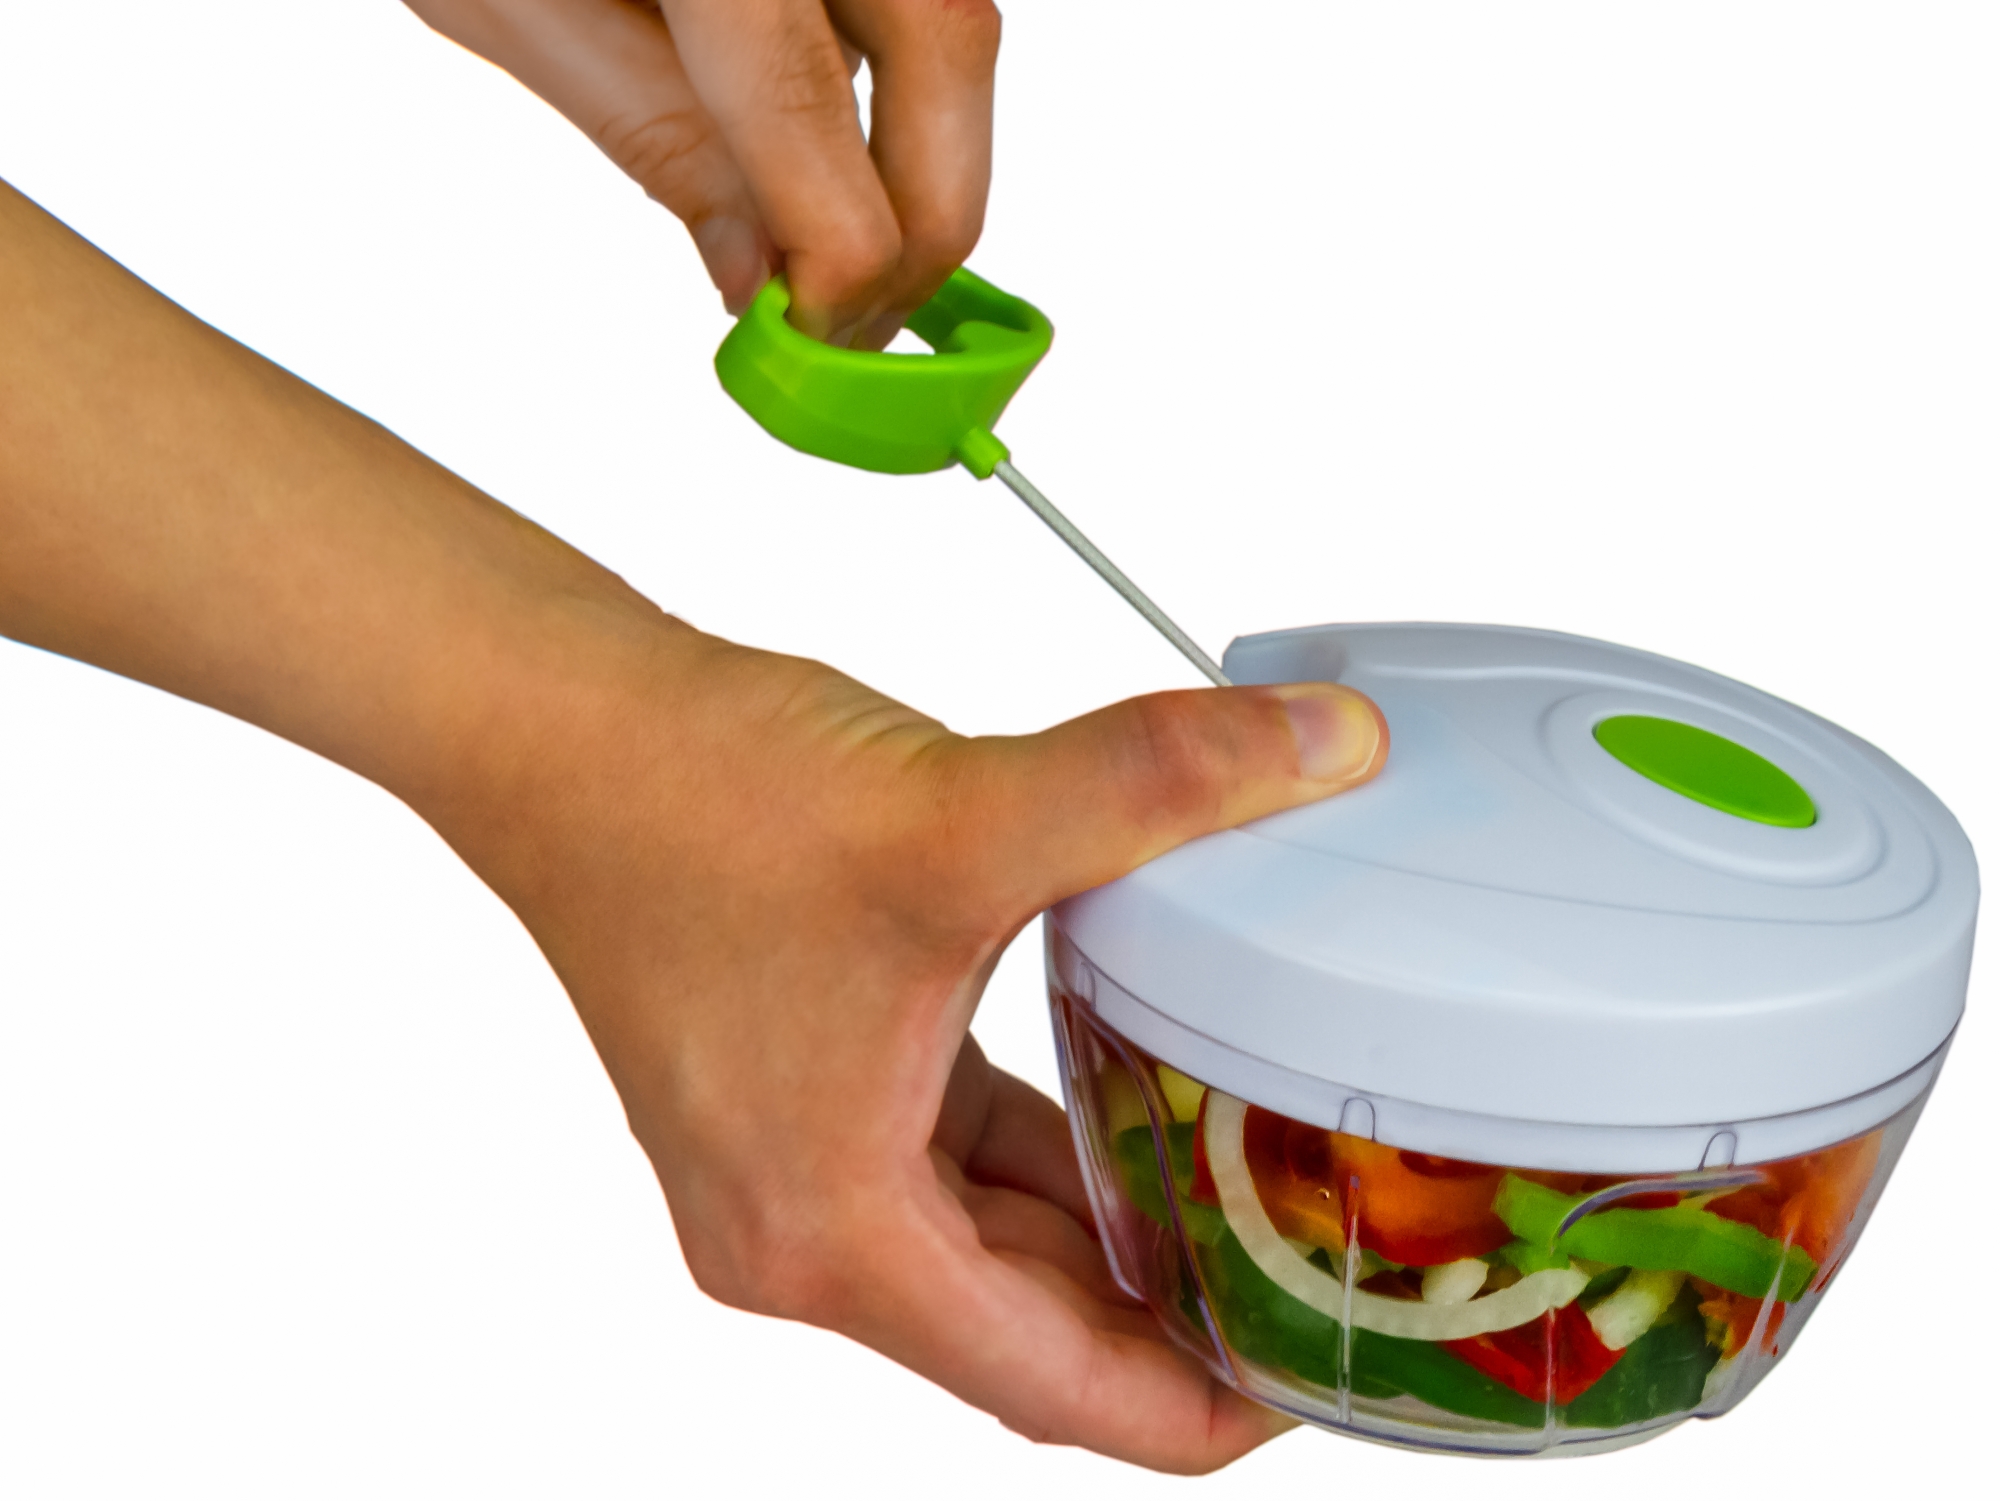 Vegetable Spiralizers, Spiral Slicers and More Kitchen Gadgets | Brieftons